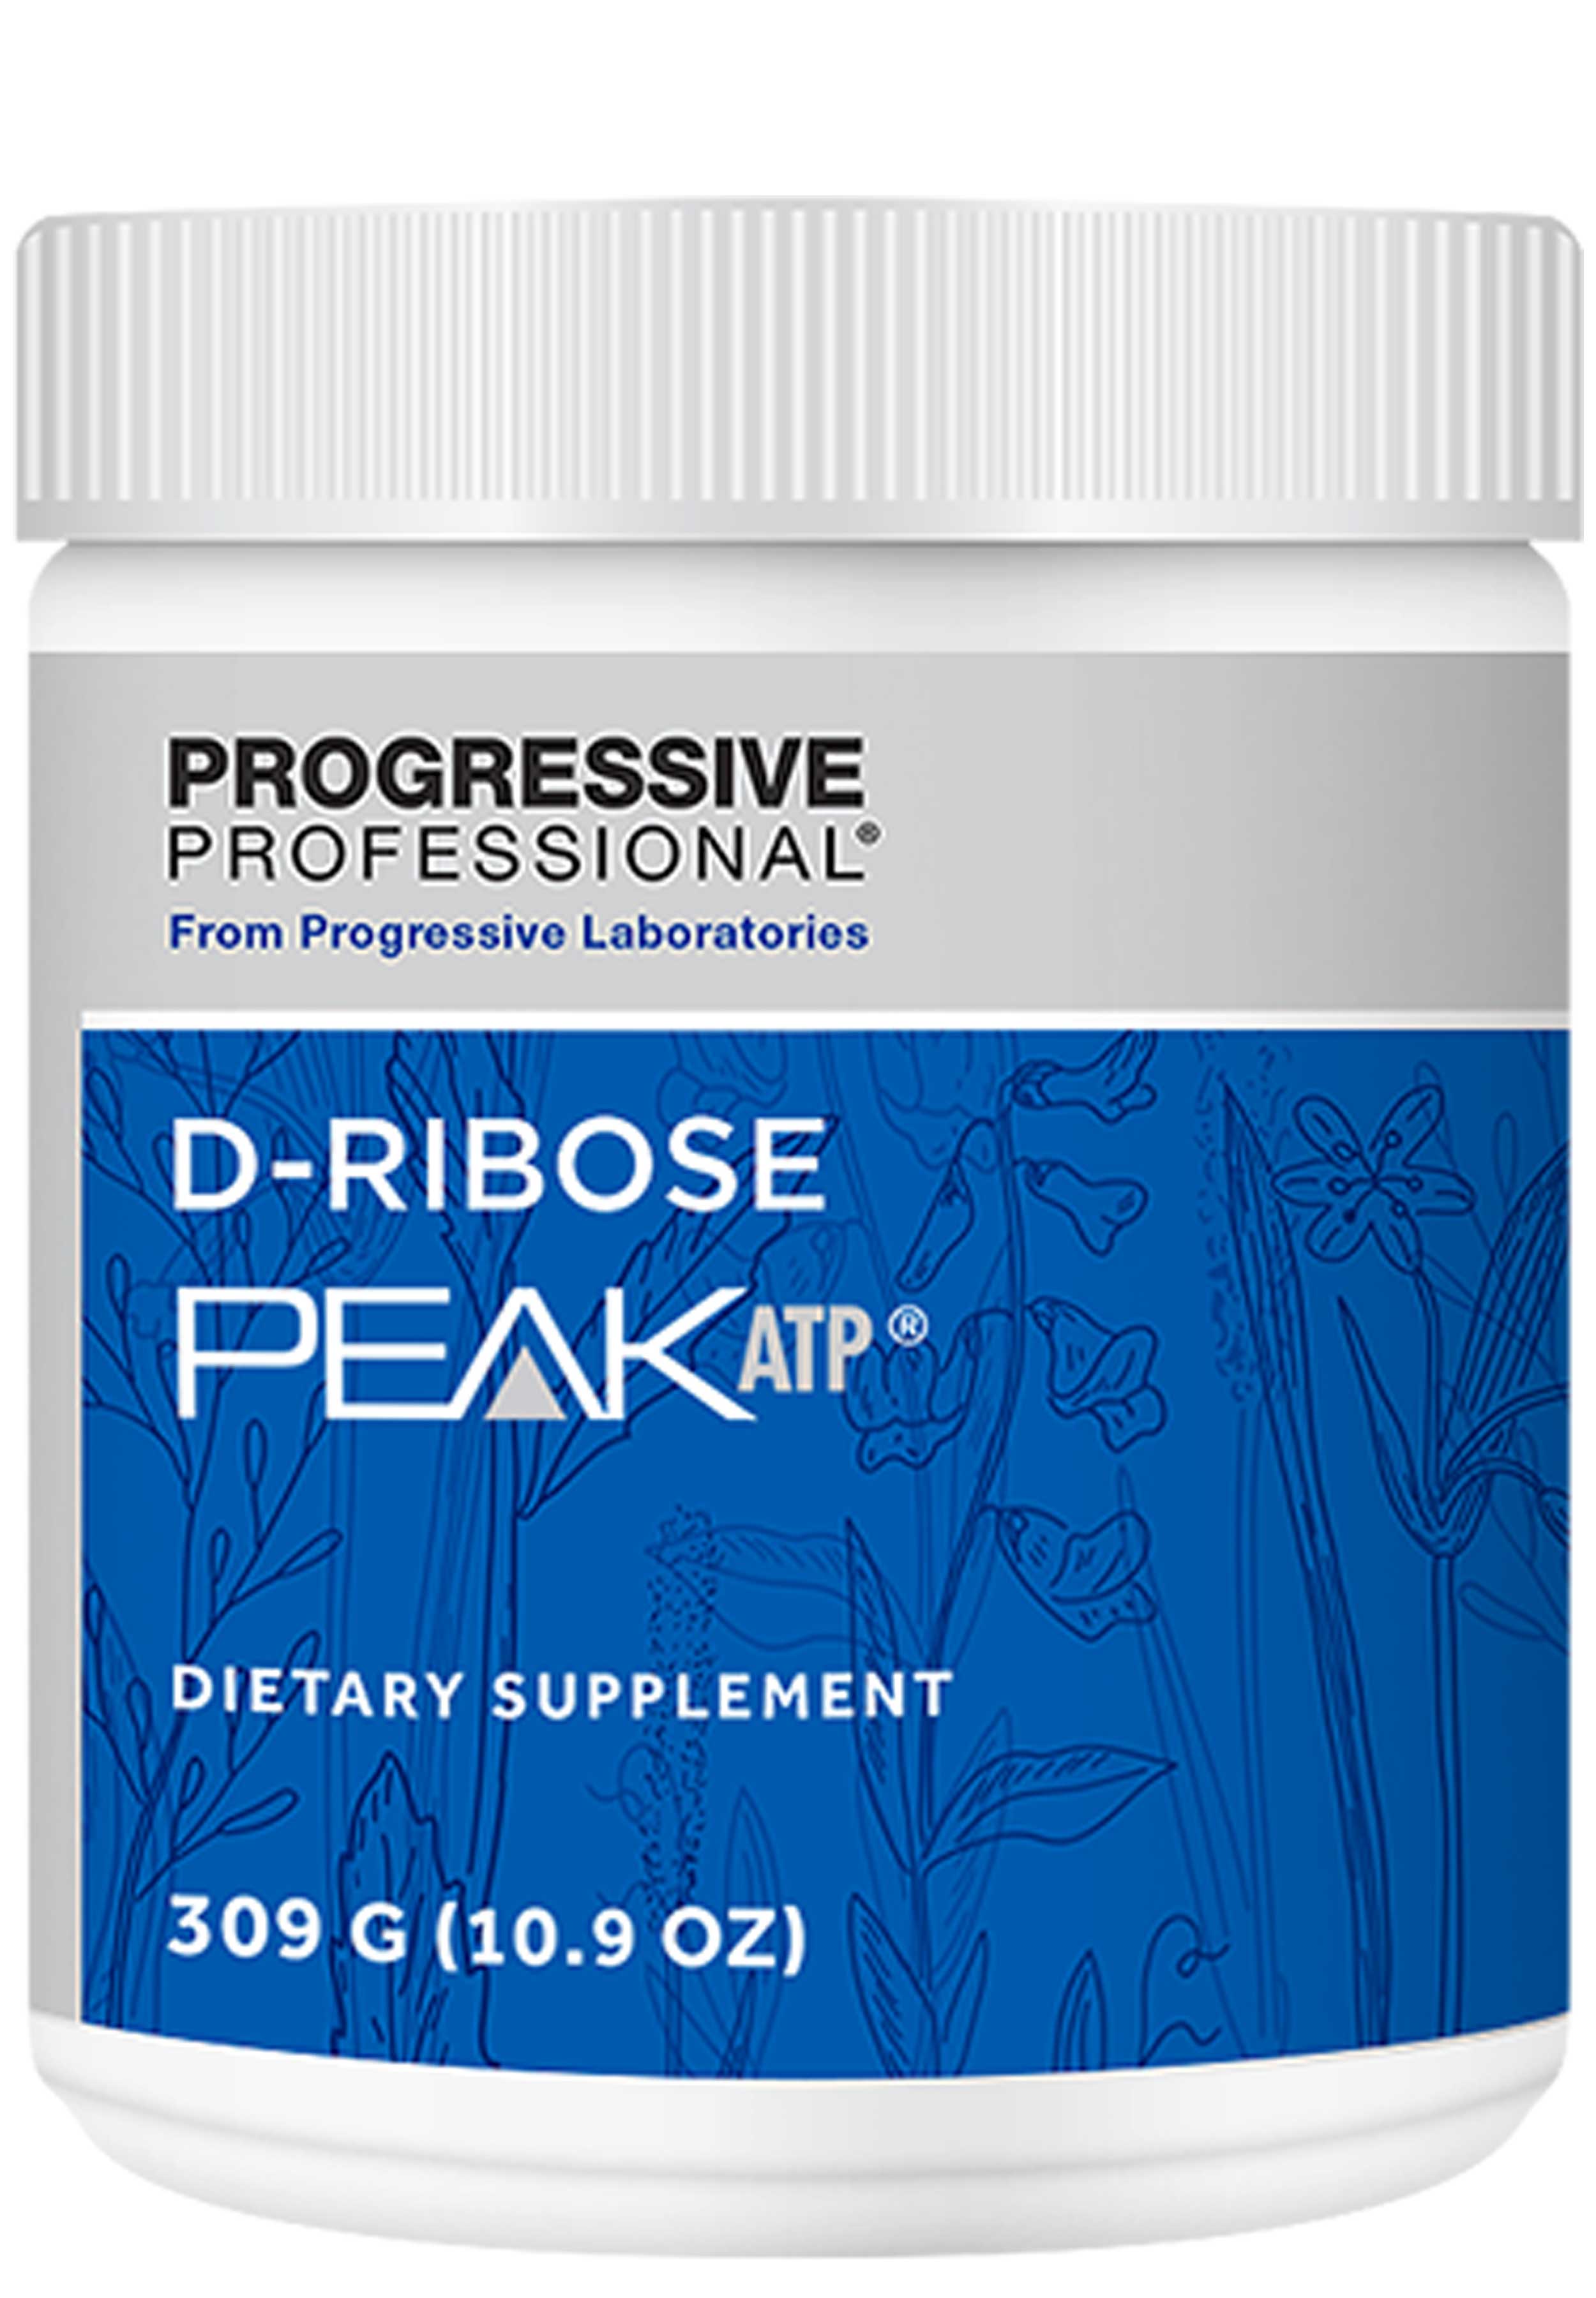 Progressive Laboratories D-Ribose with PEAK ATP